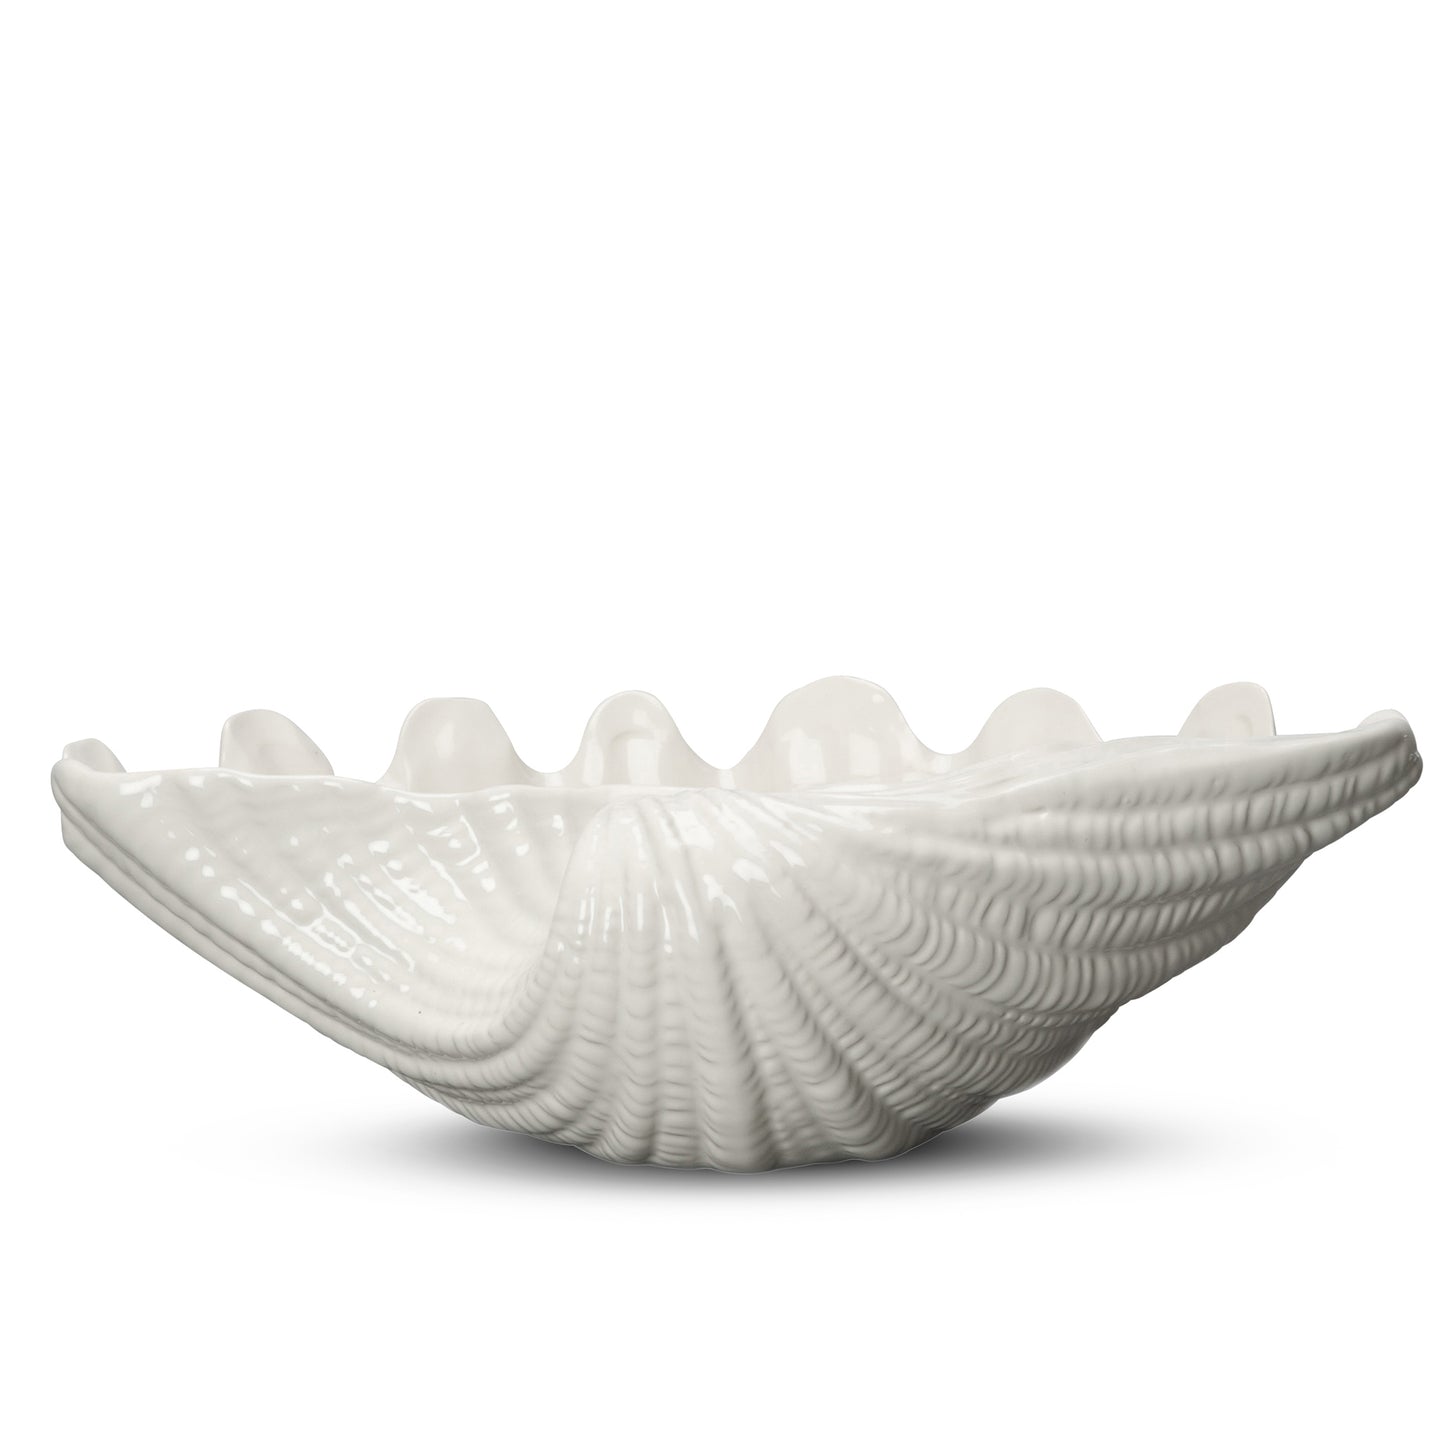 ByON by Widgeteer Shell Bowl, Ceramic, White